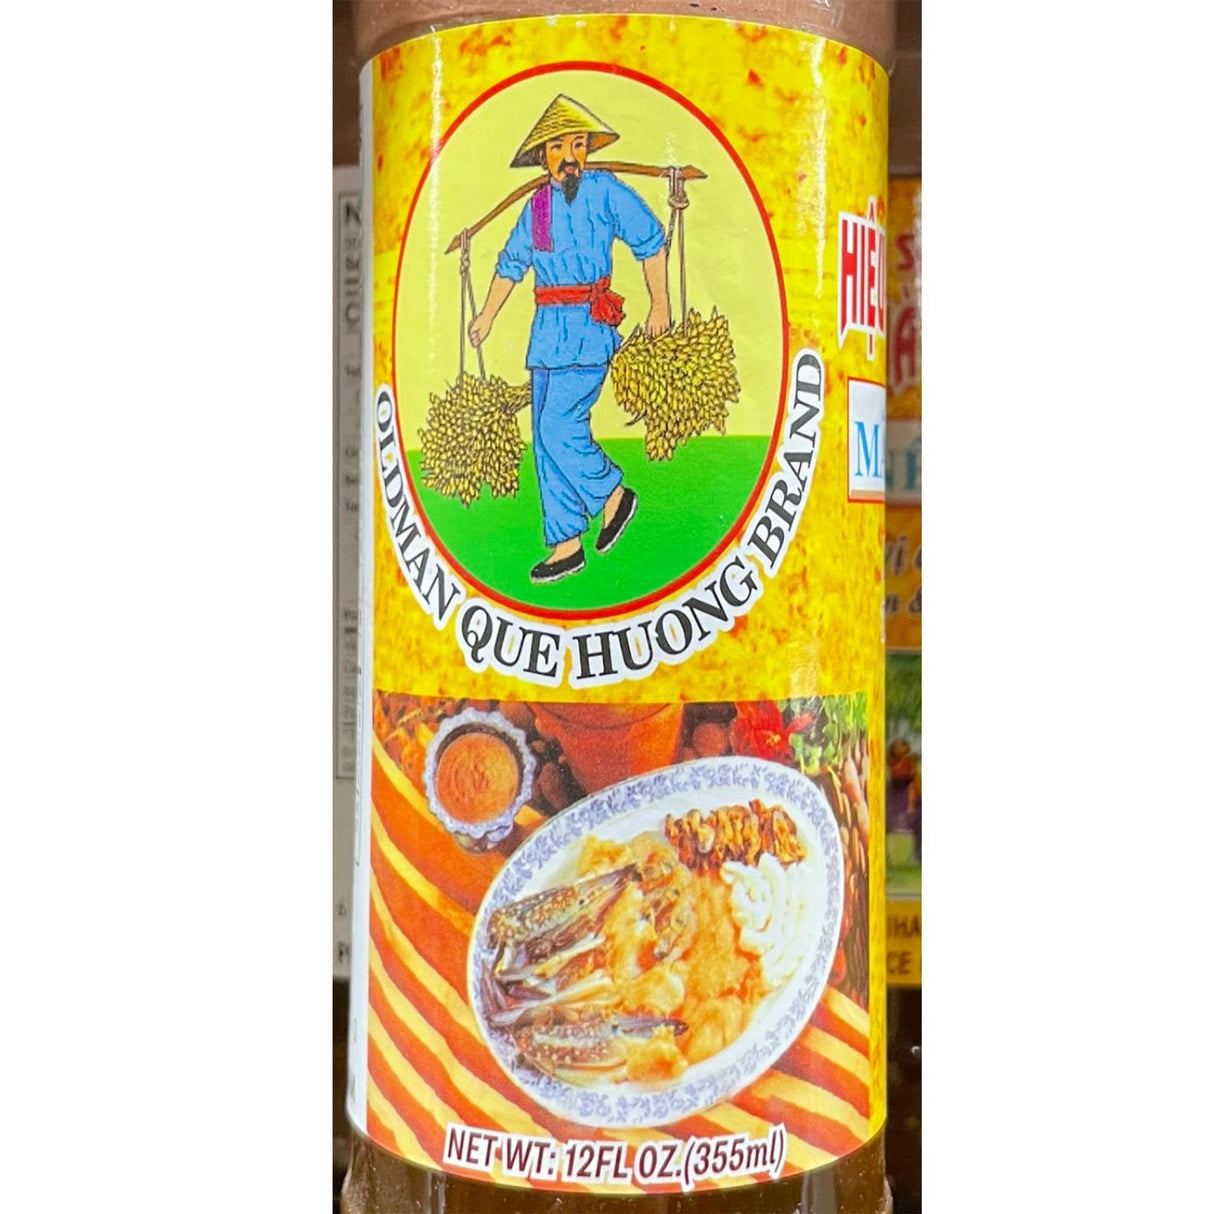 Oldman Que Huong Brand Fish Sauce (890)